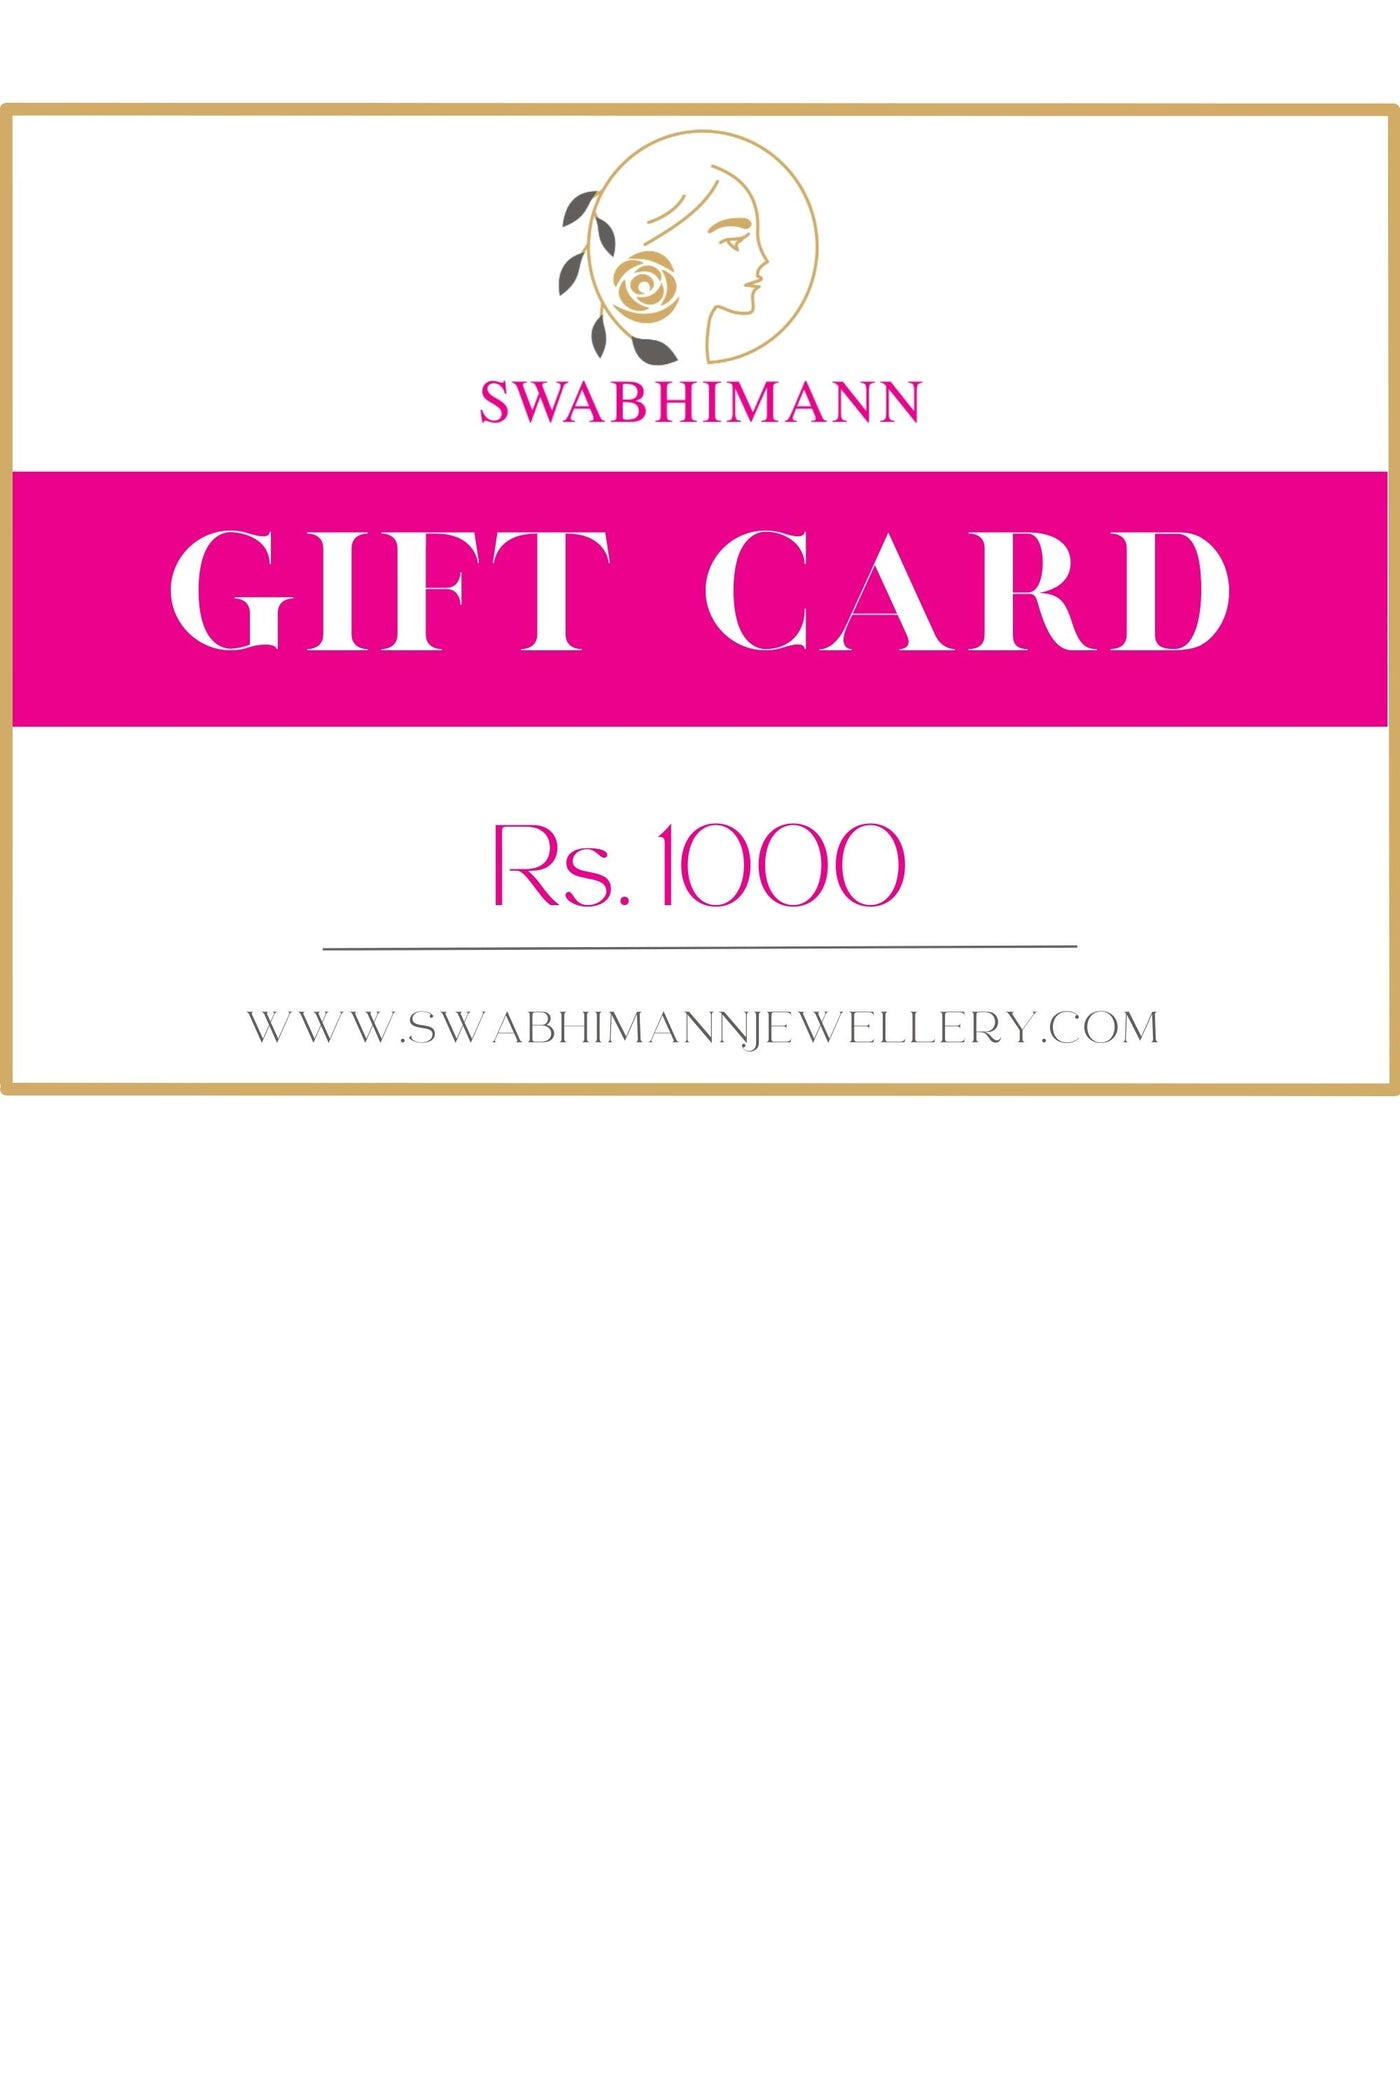 Swabhimann Jewellery Gift Card.